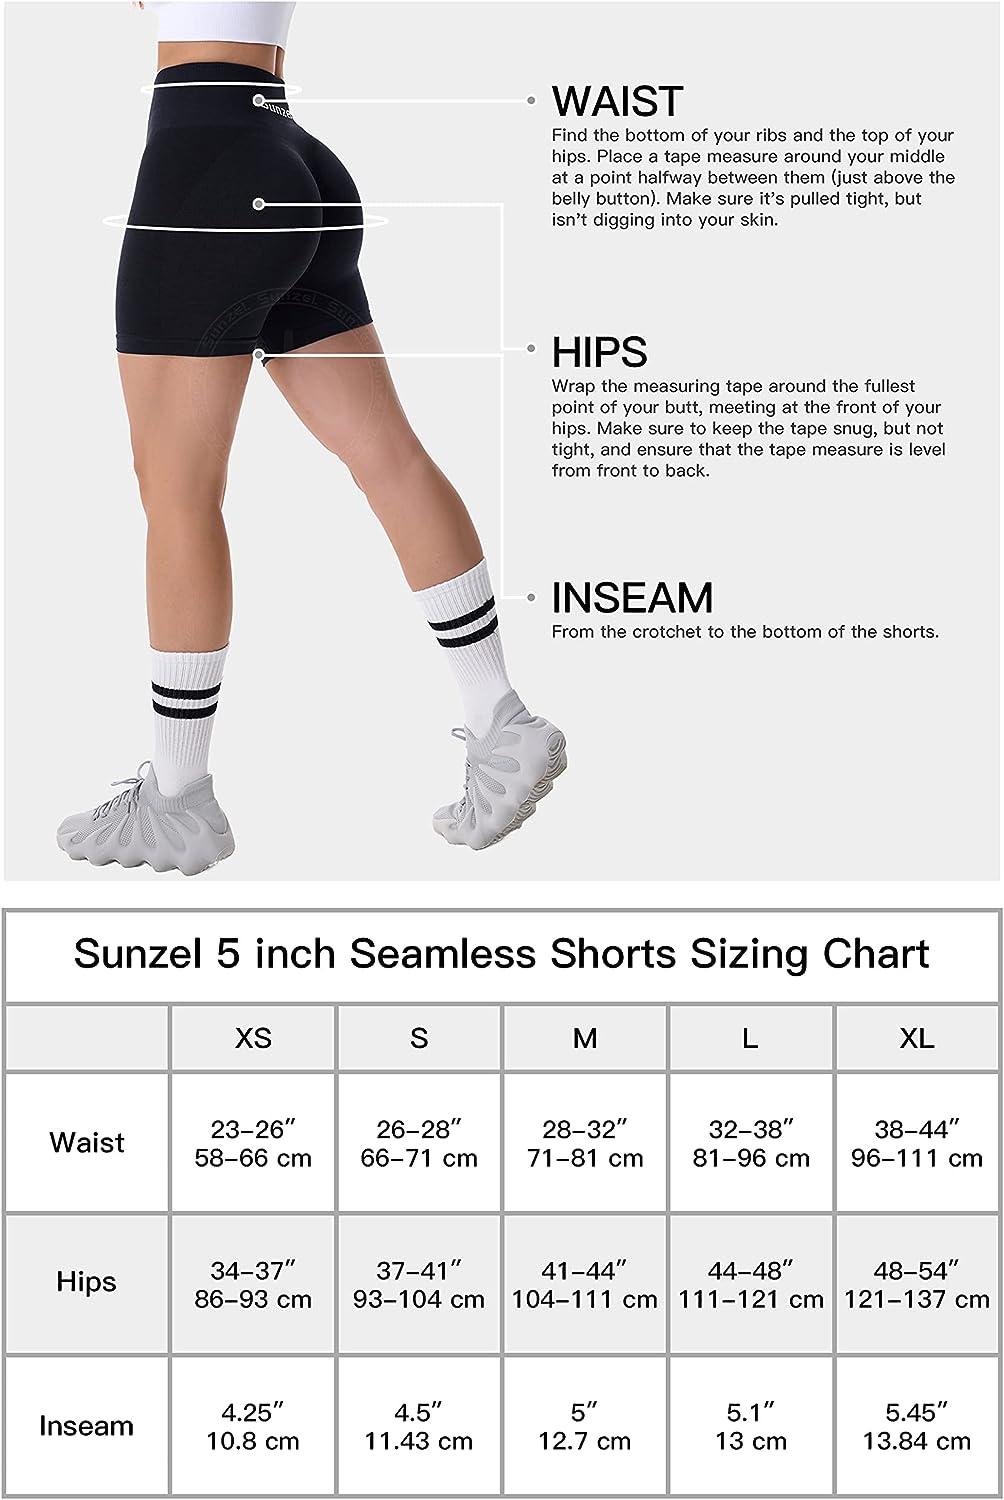 Sunzel Women's Biker Shorts in High Waist Tummy Control with No